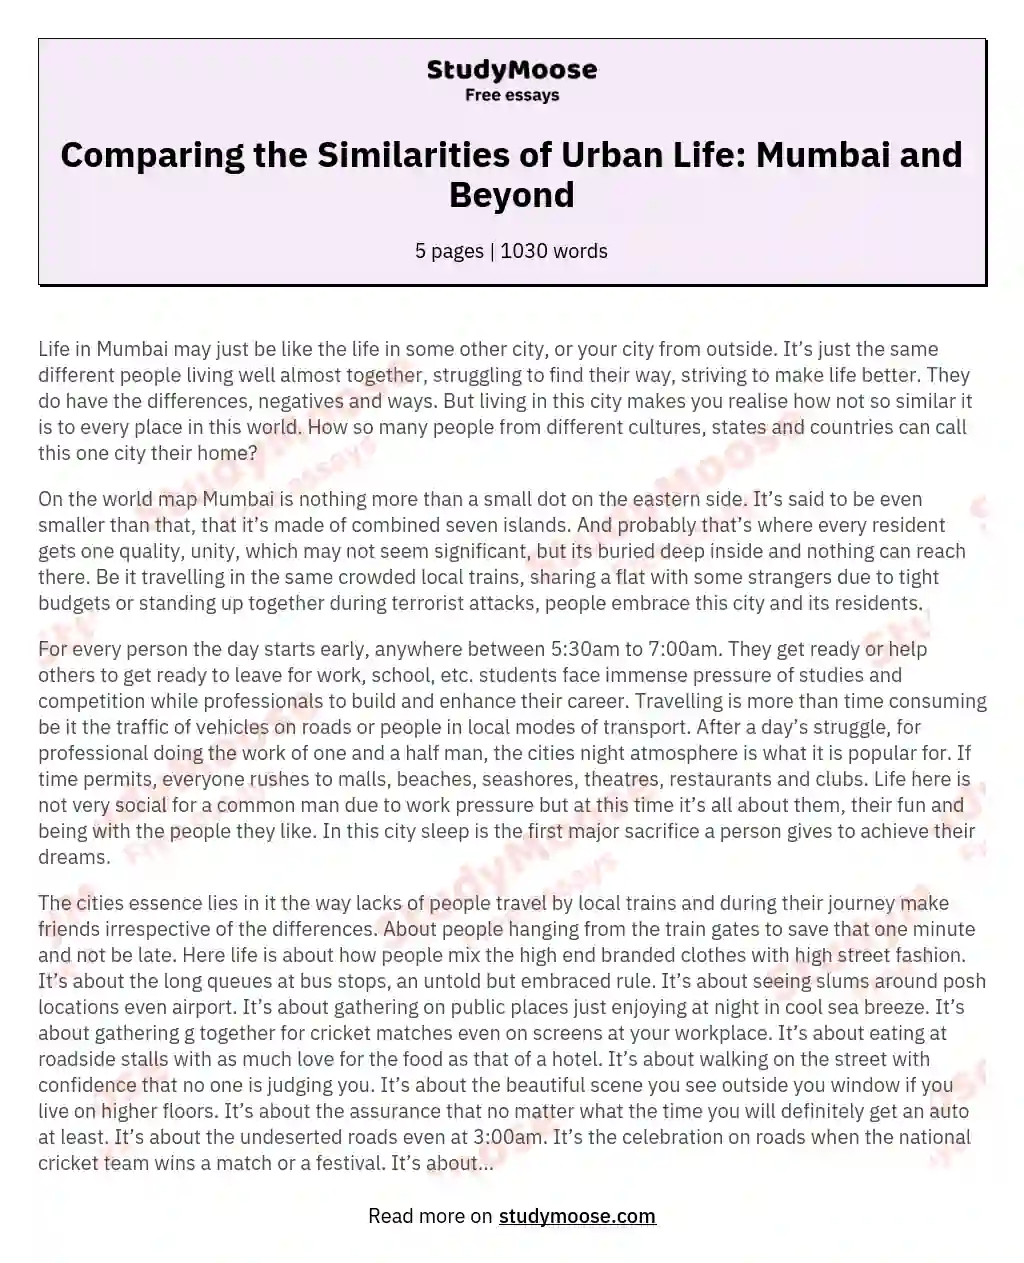 Comparing the Similarities of Urban Life: Mumbai and Beyond essay